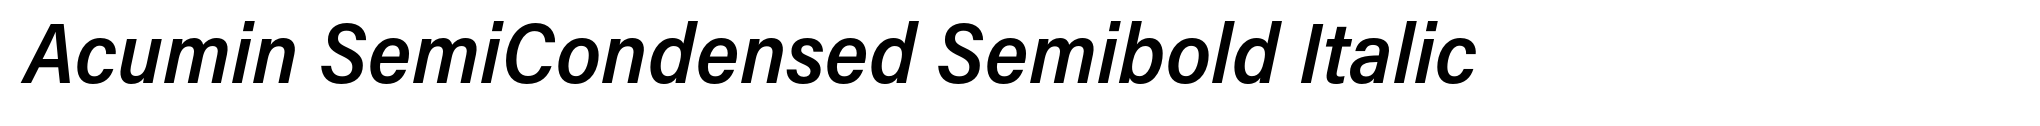 Acumin SemiCondensed Semibold Italic image